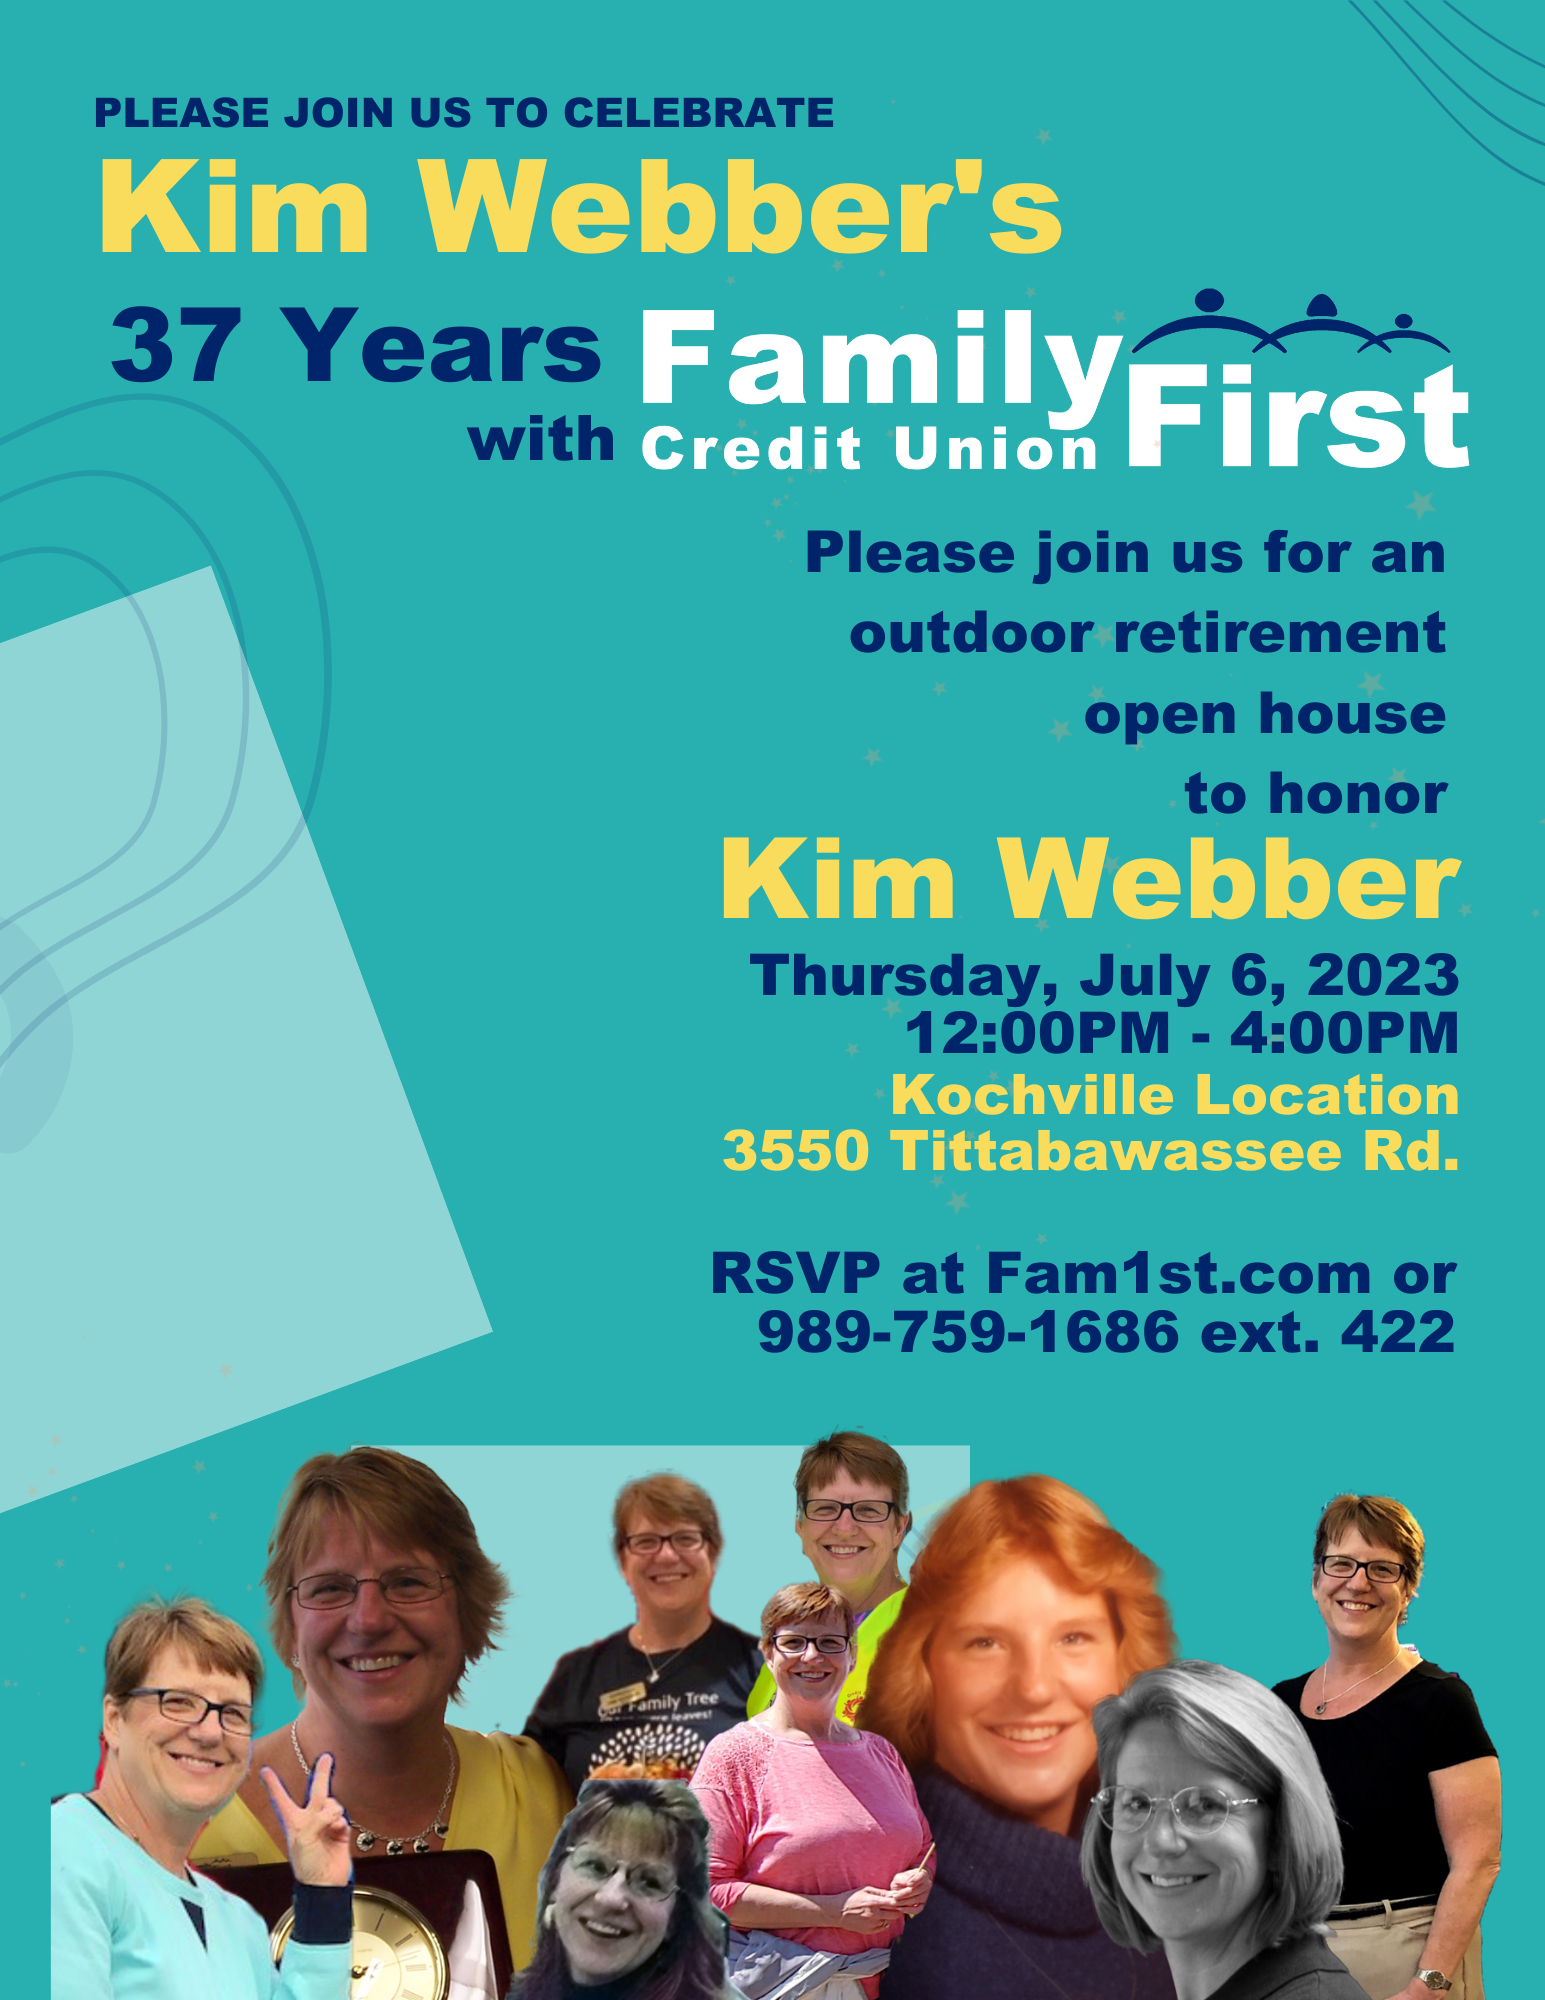 Kim Webber Retirement Party Kochville Location Thursday July 6 12pm to 4pm